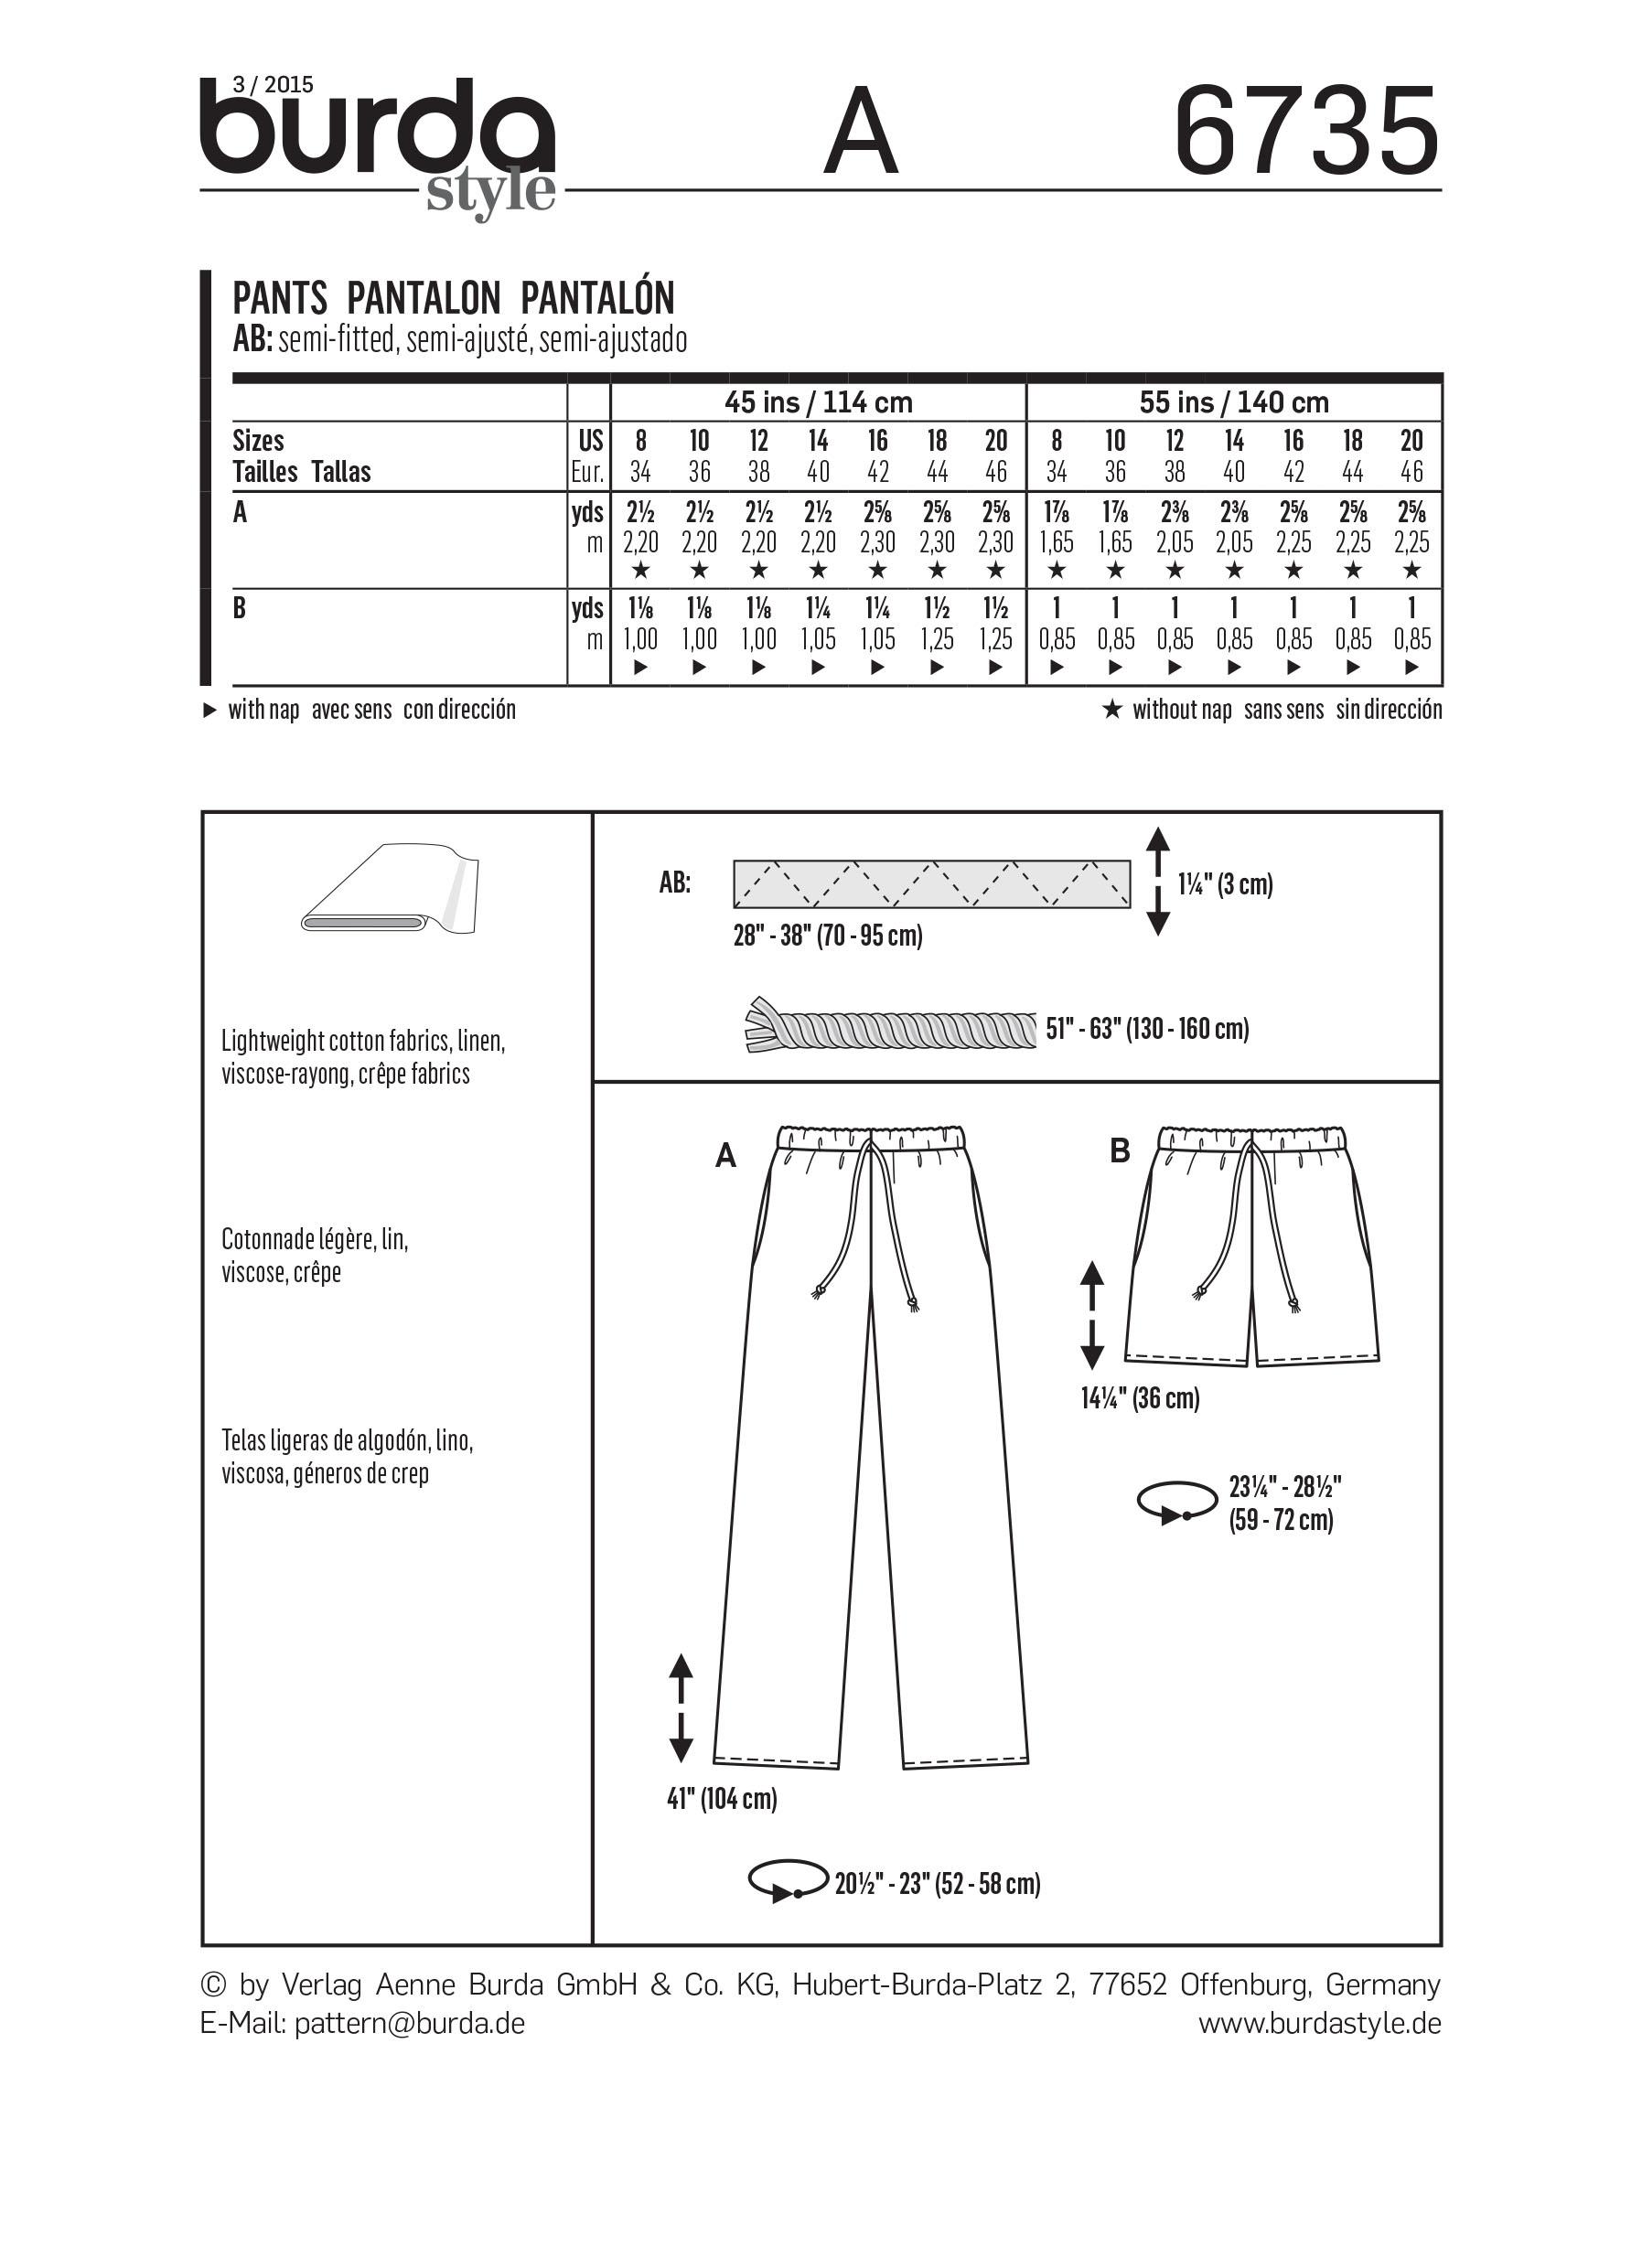 Burda B6735 Women's Trousers Sewing Pattern